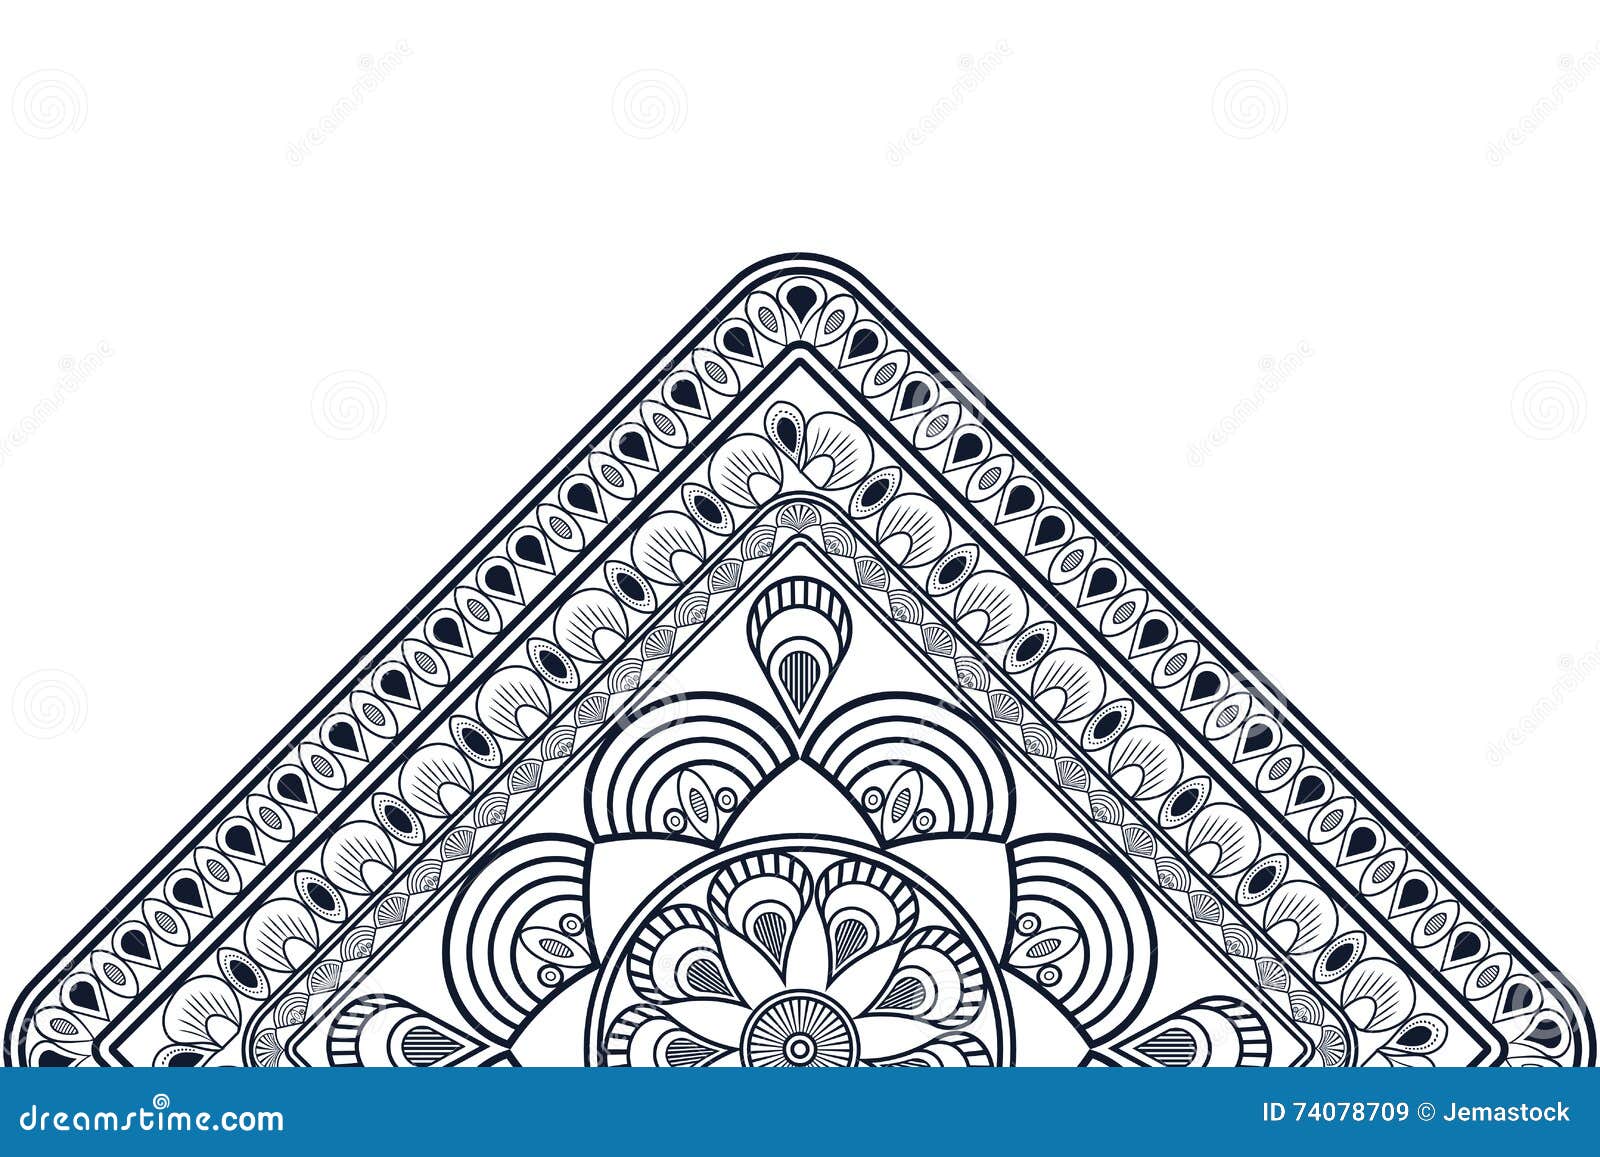 Download Triangular Decorative Line Half Mandala Icon Stock ...